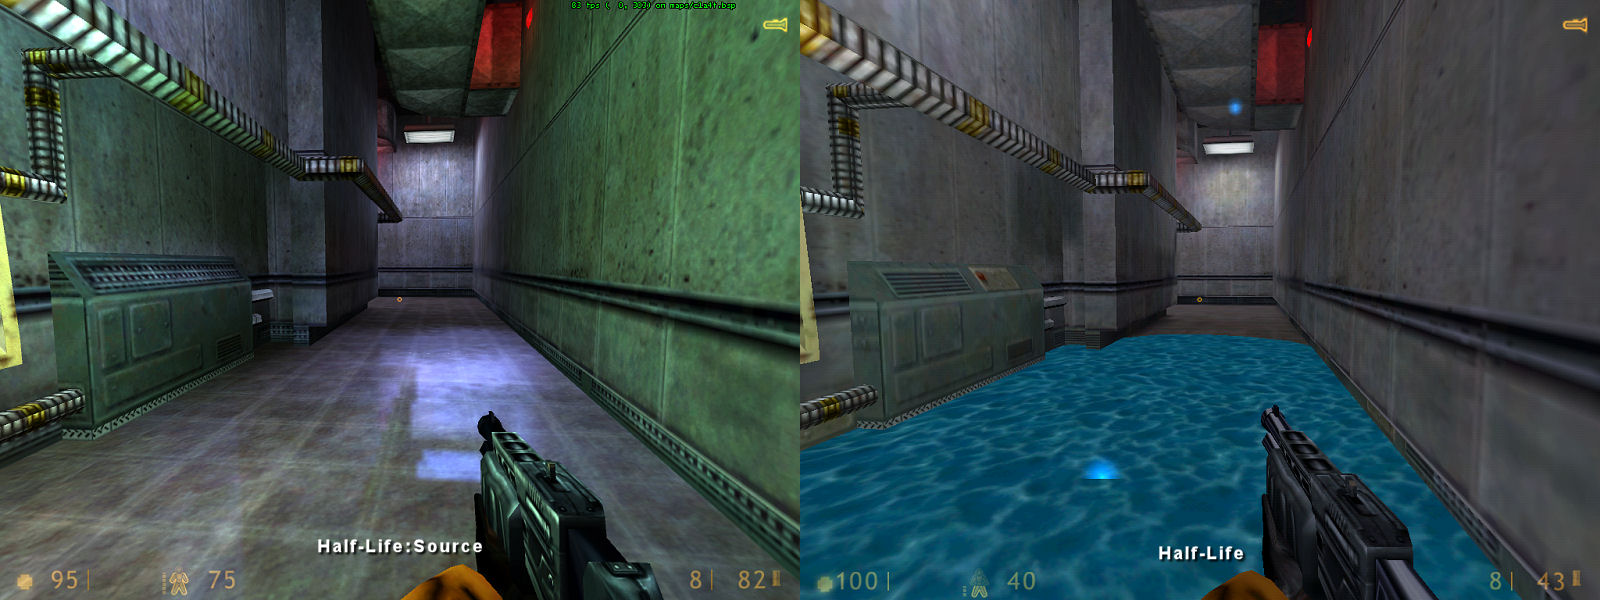 Half-Life Source: Valve 7 anni dopo